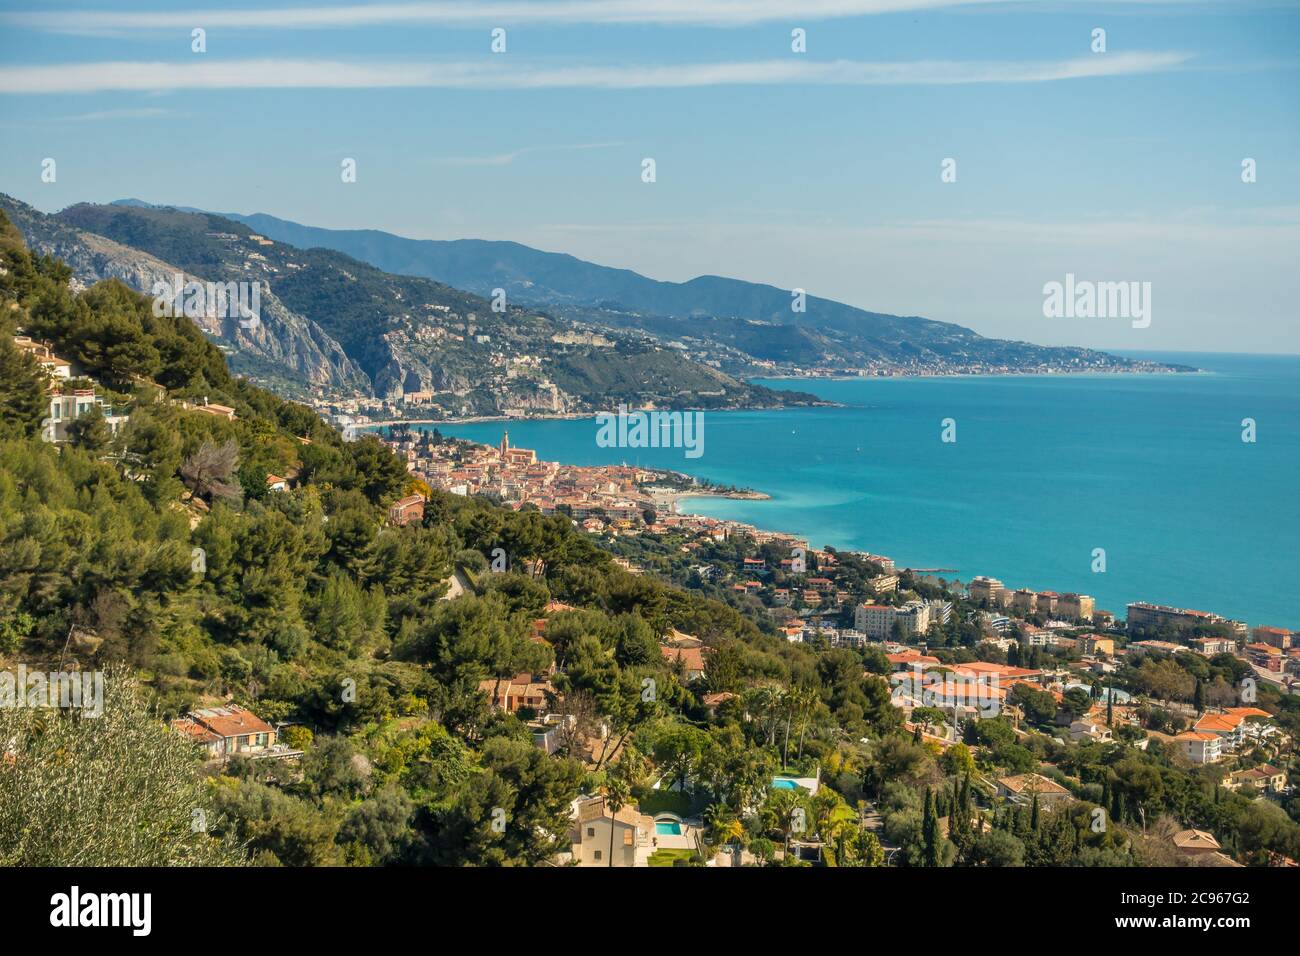 Vista elevata da Roquebrune a Mentone e Liguria (Italia), Costa Azzurra, Francia, Europa Foto Stock